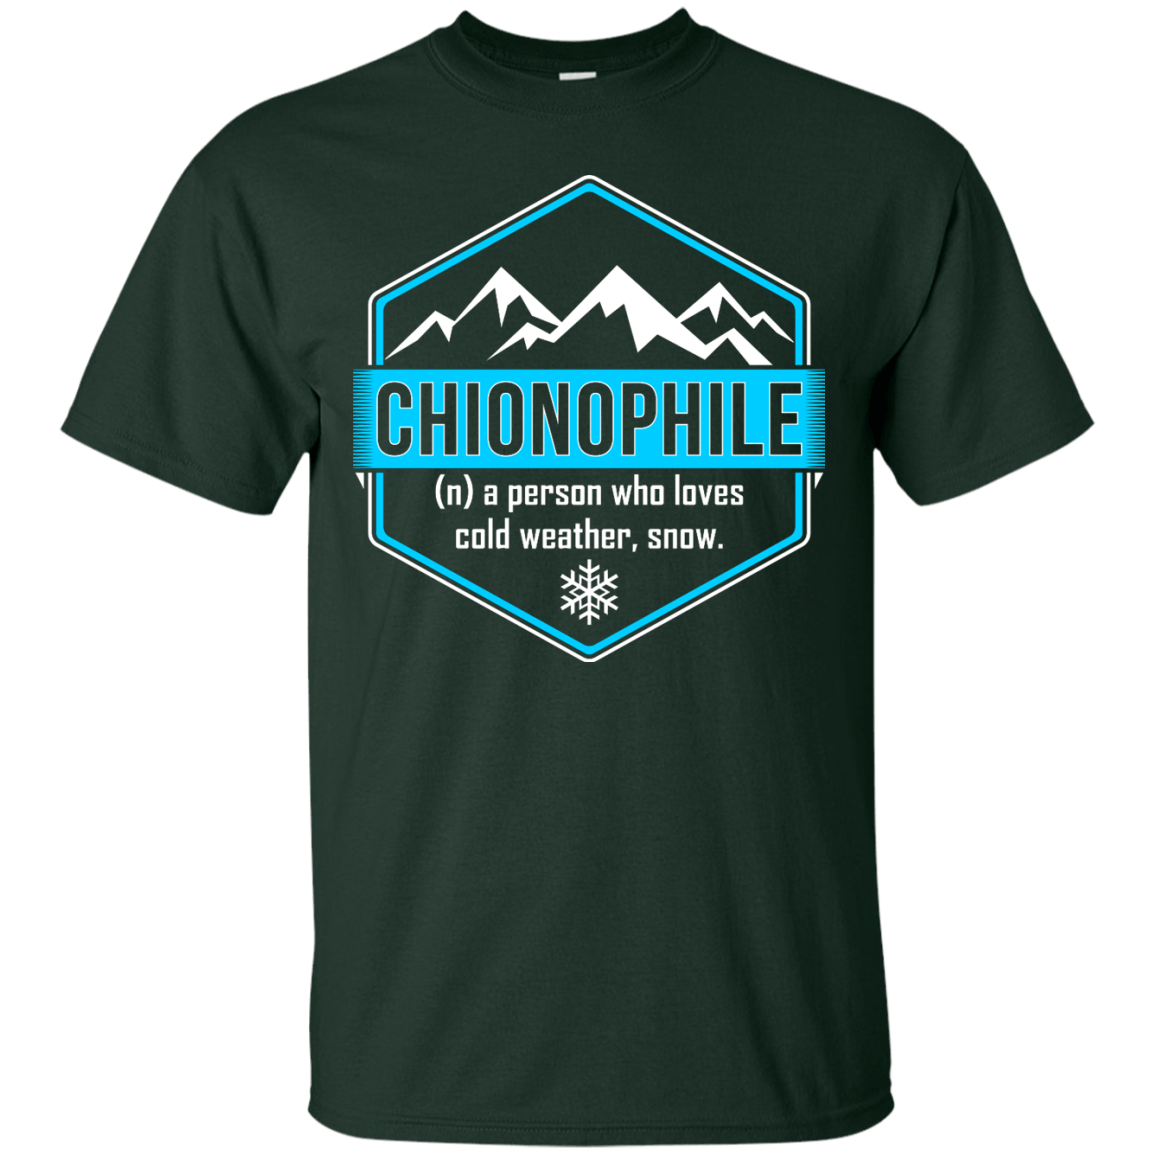 Chionophile Tees - Powderaddicts